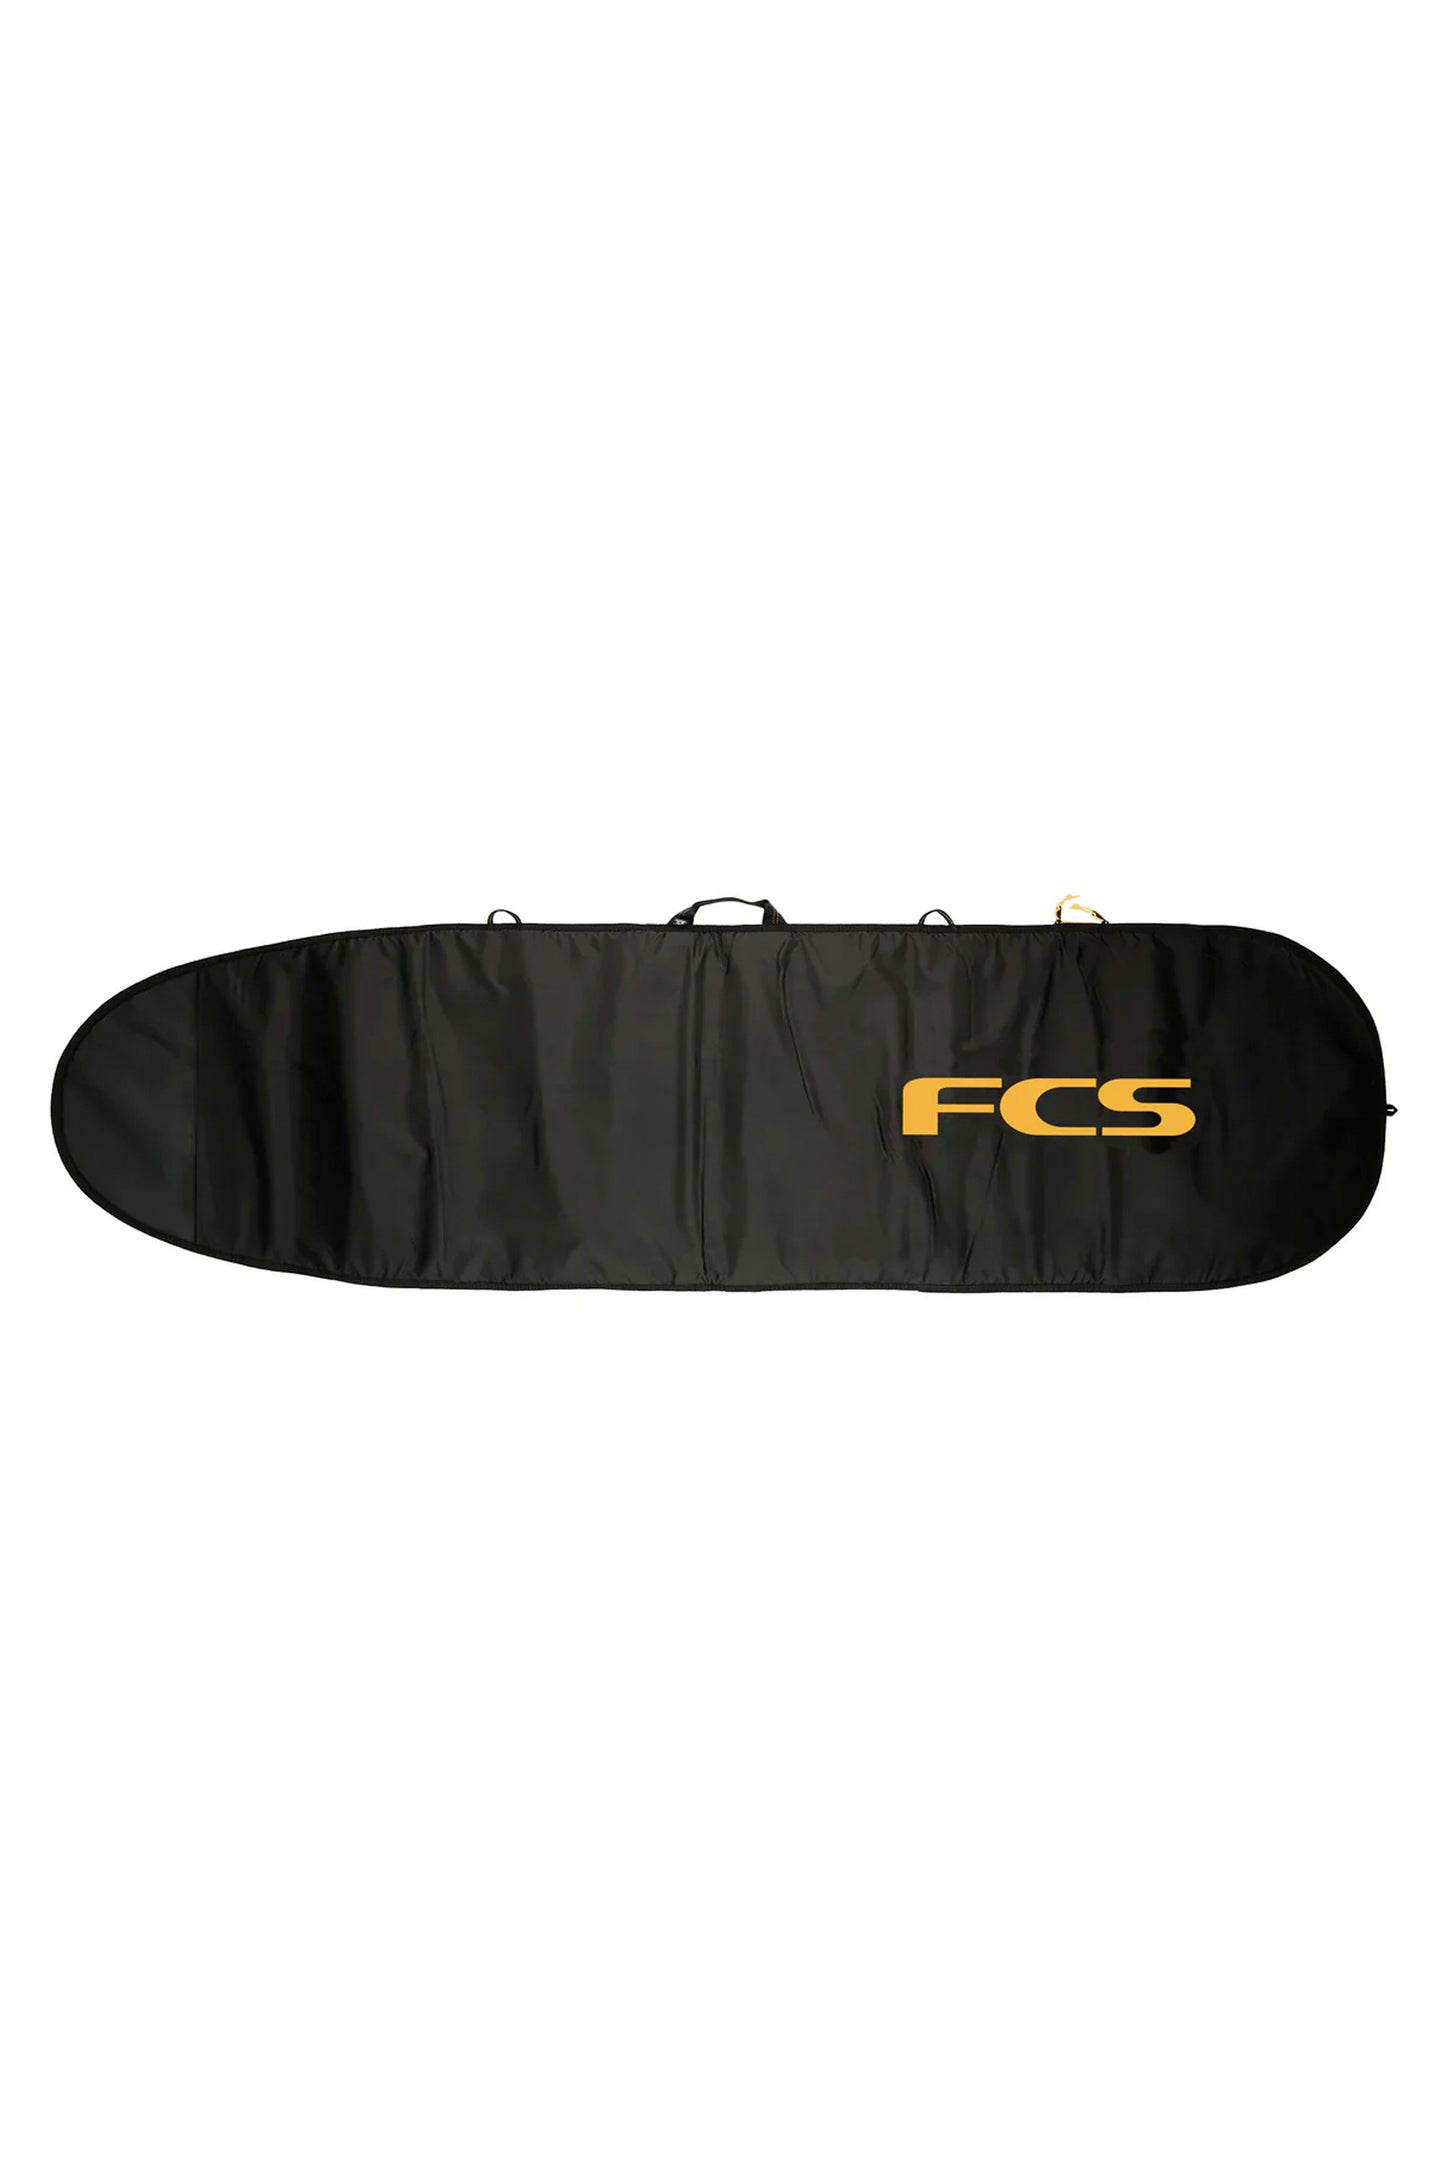 Pukas-Surf-Shop-fcs-classic-fun-board-cover-black-mango